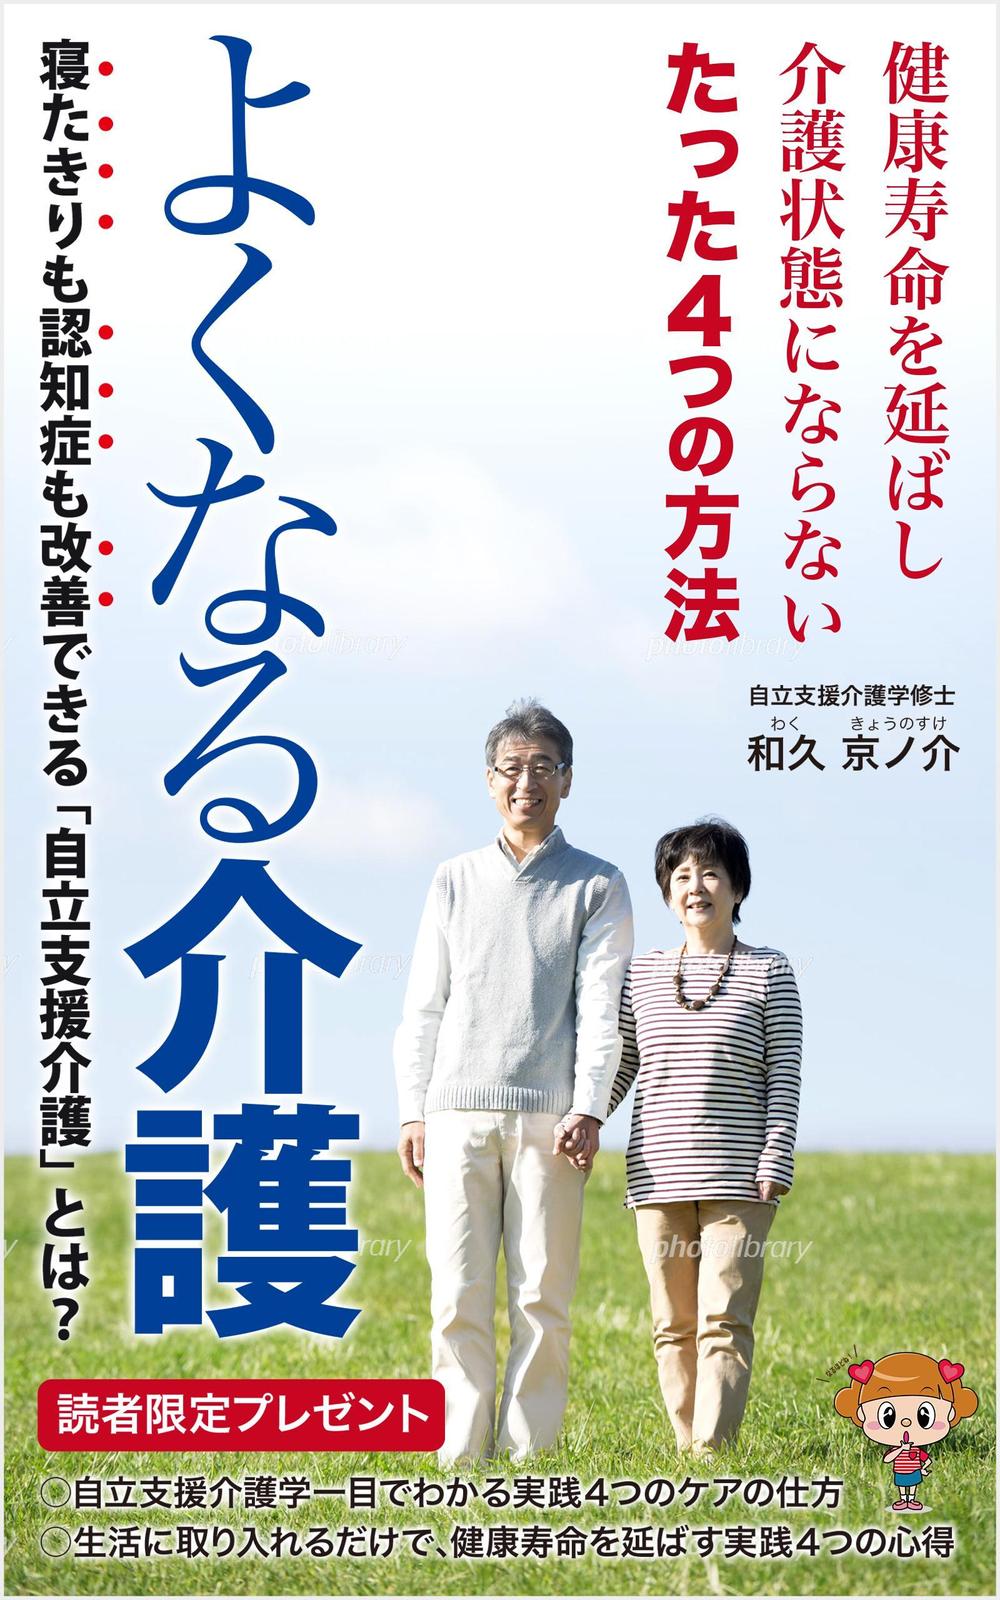 yokunarukaigo_book_c.jpg